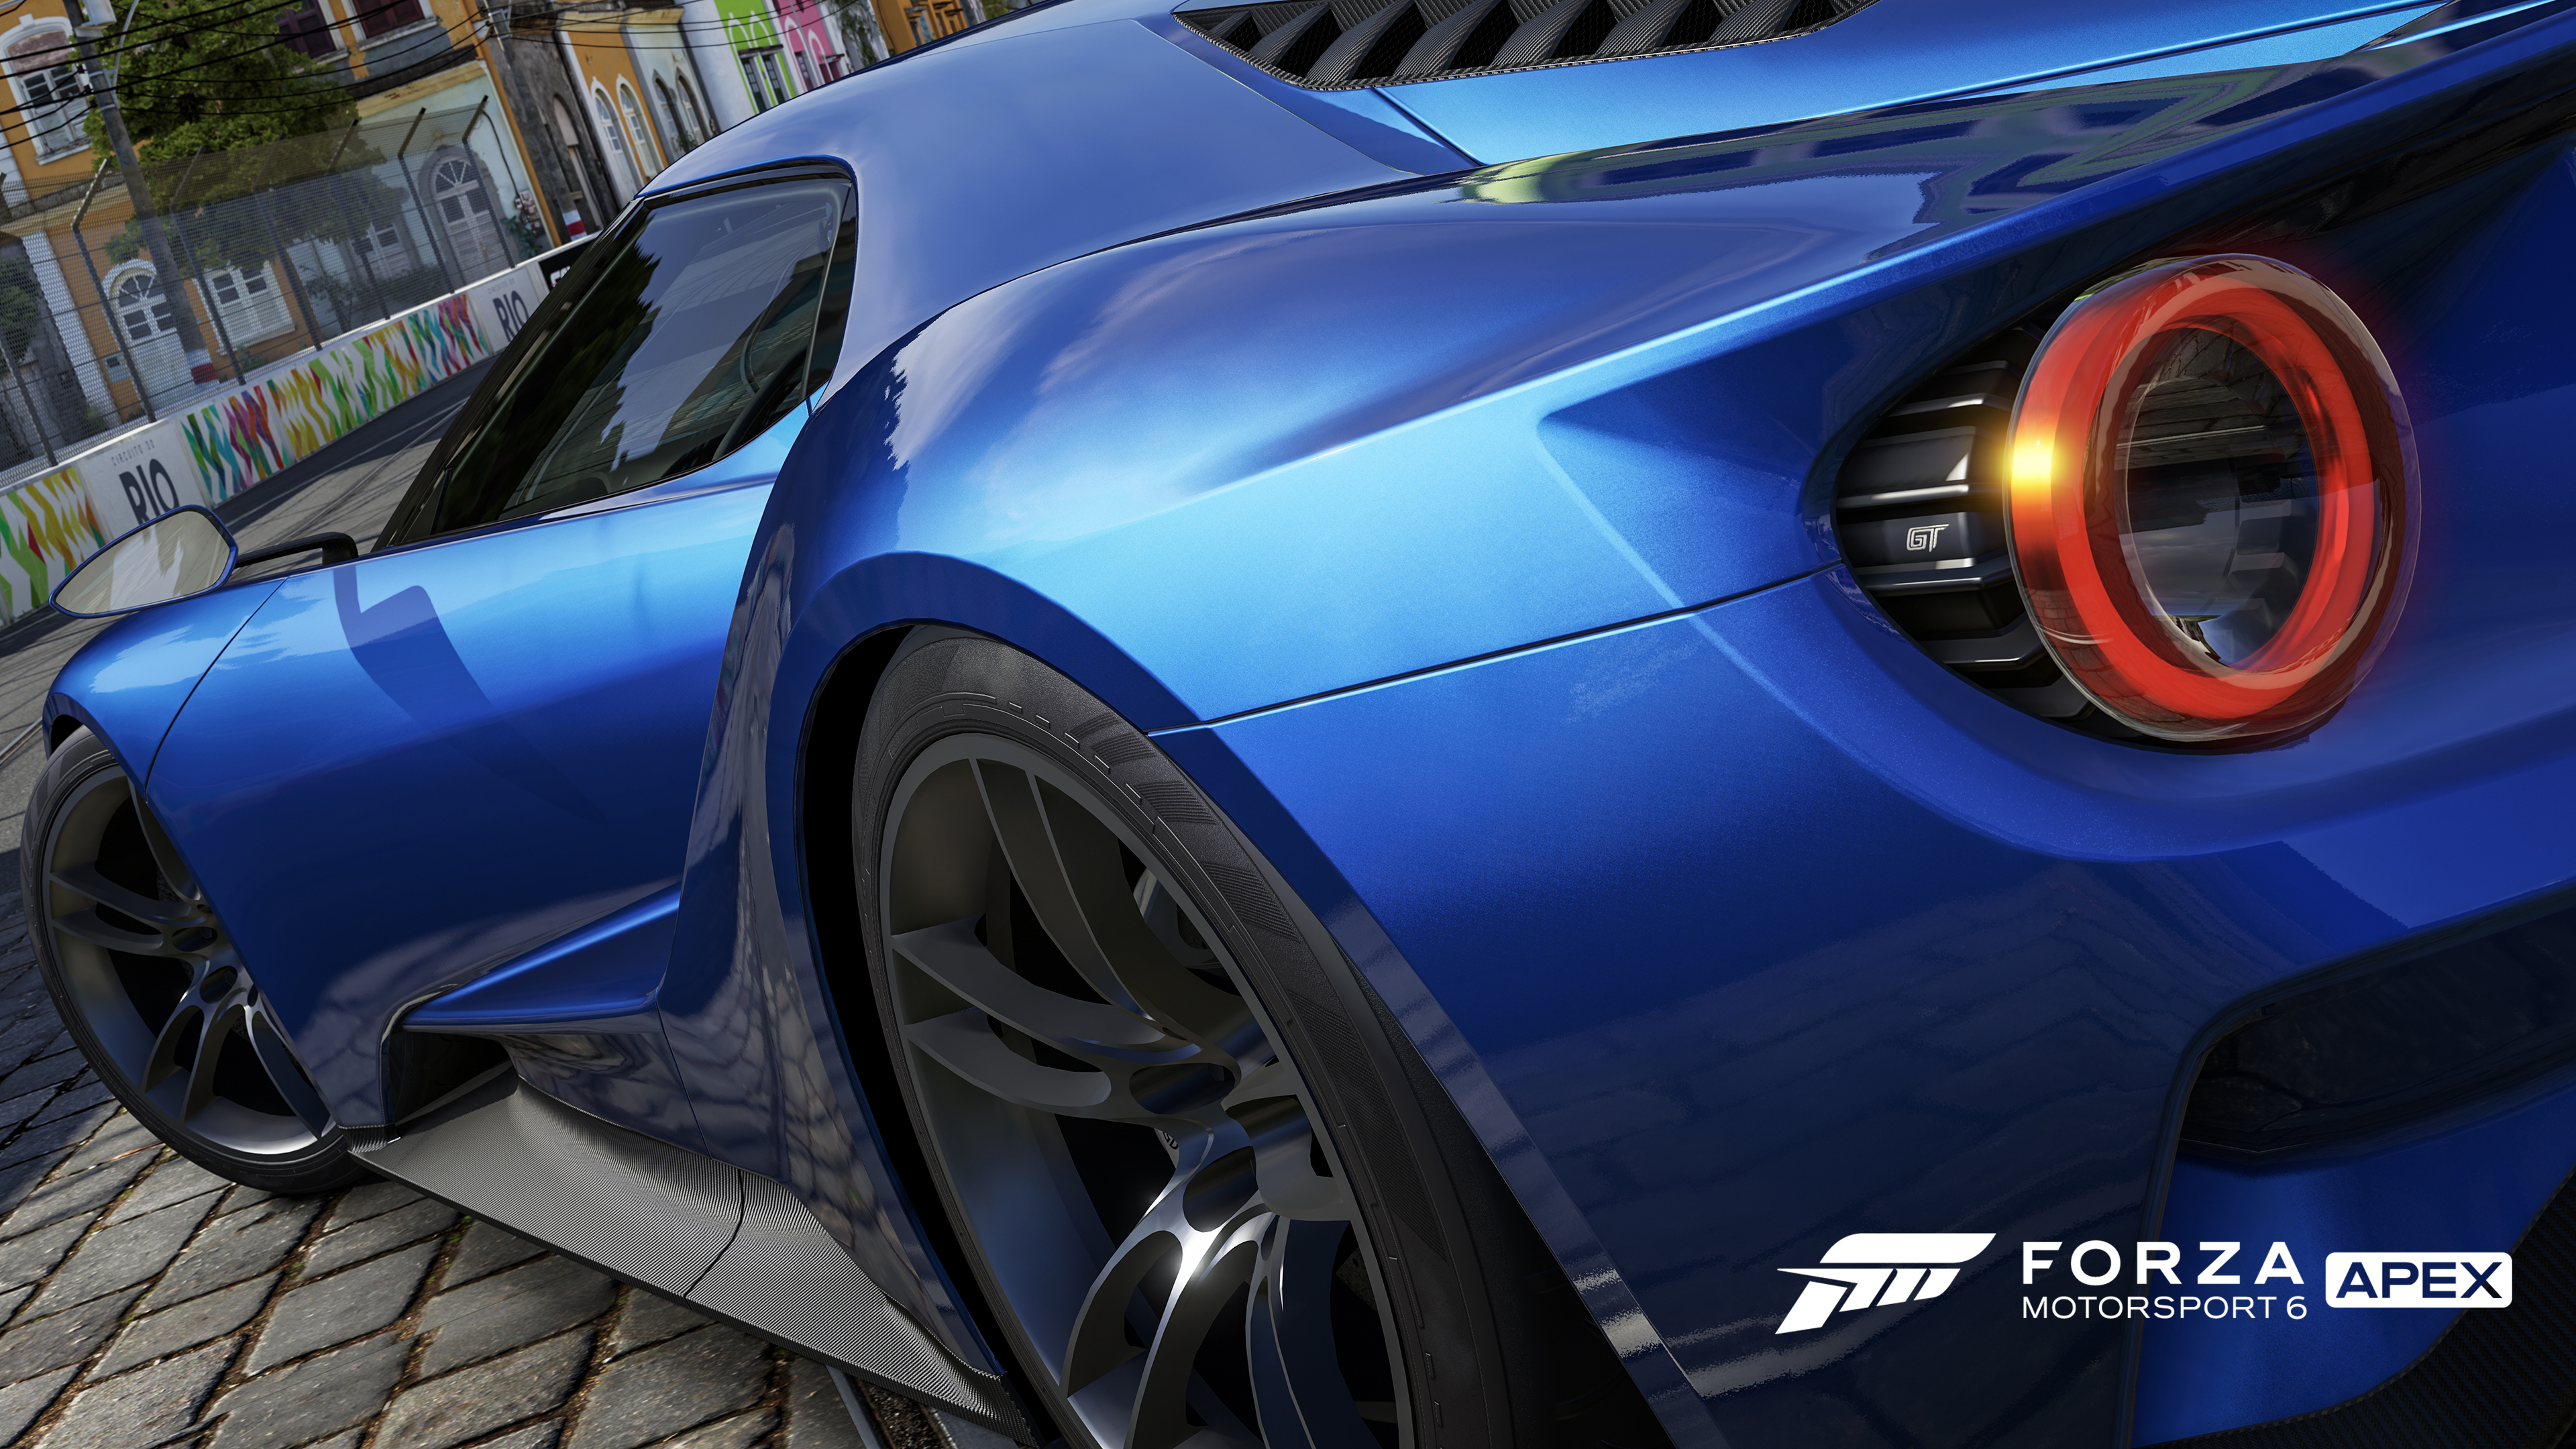 Nice Images Collection: Forza Motorsport 6: Apex Desktop Wallpapers